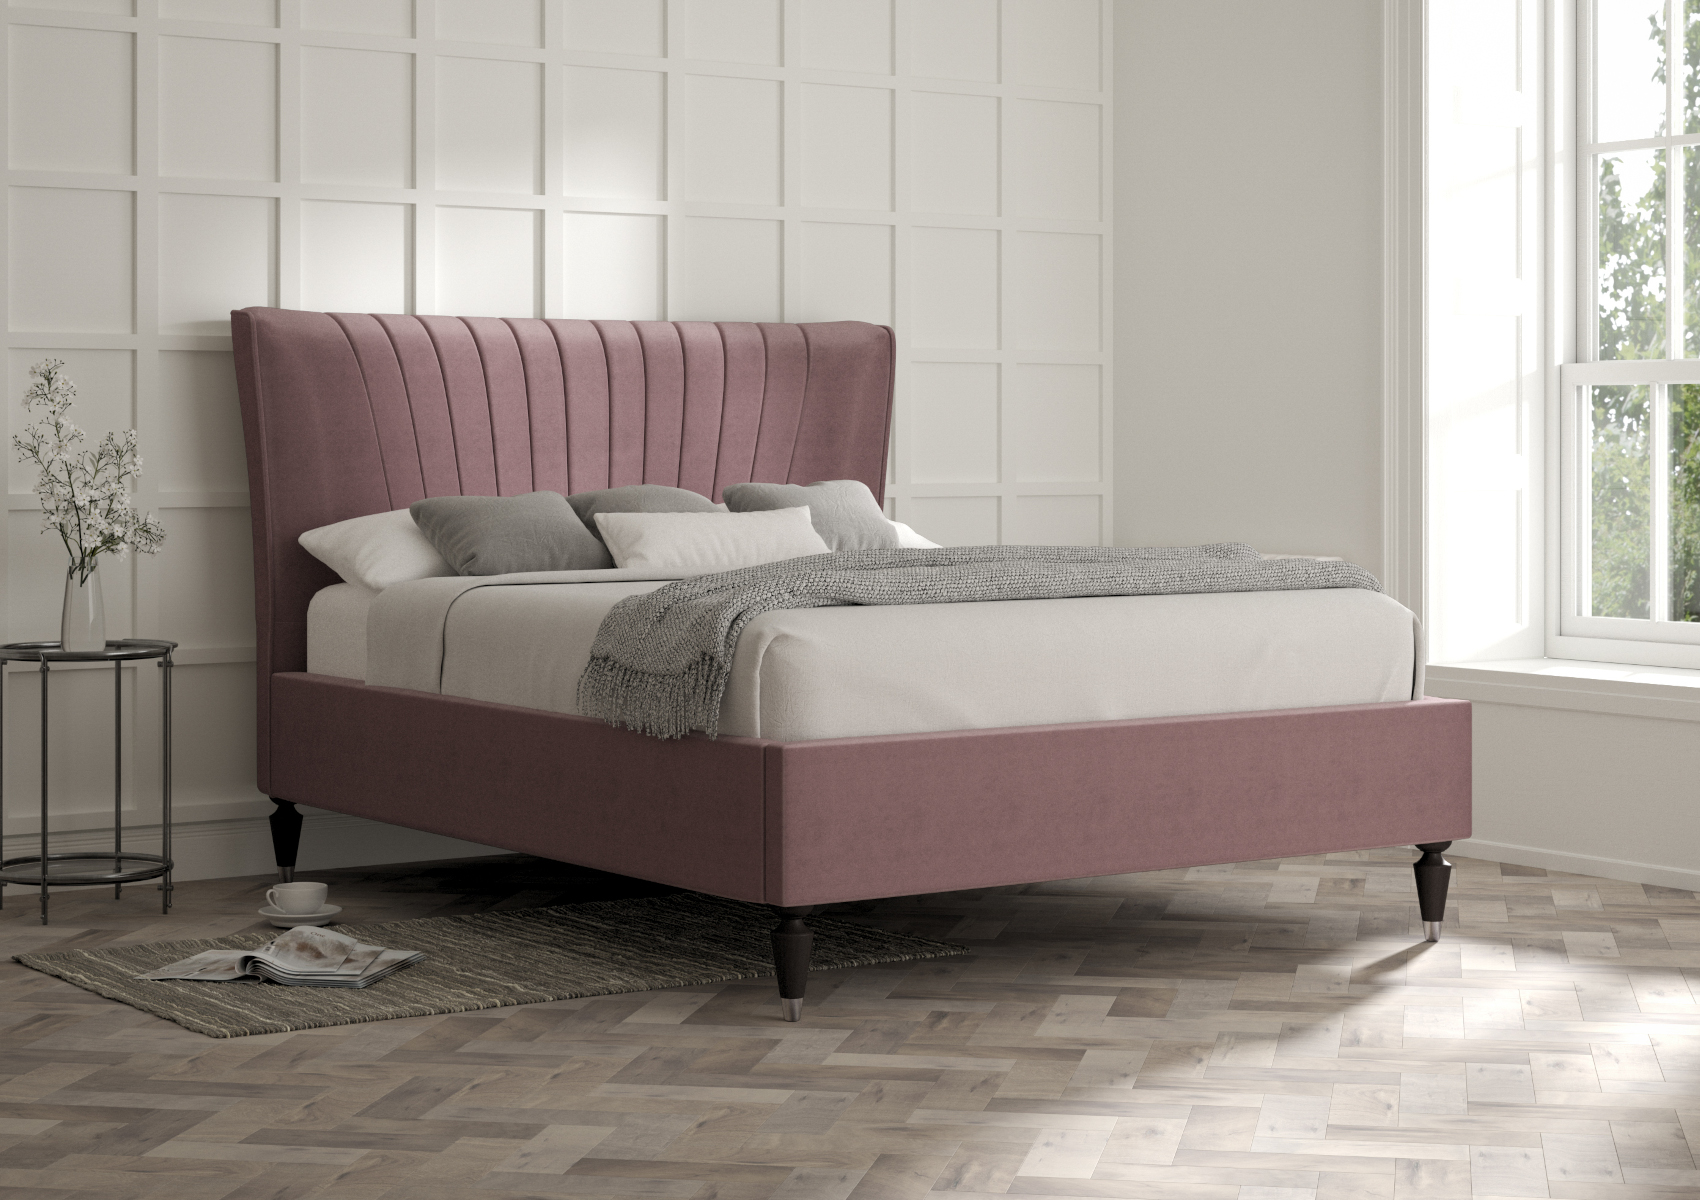 View Melbury Velvet Navy Upholstered King Size Bed Time4Sleep information